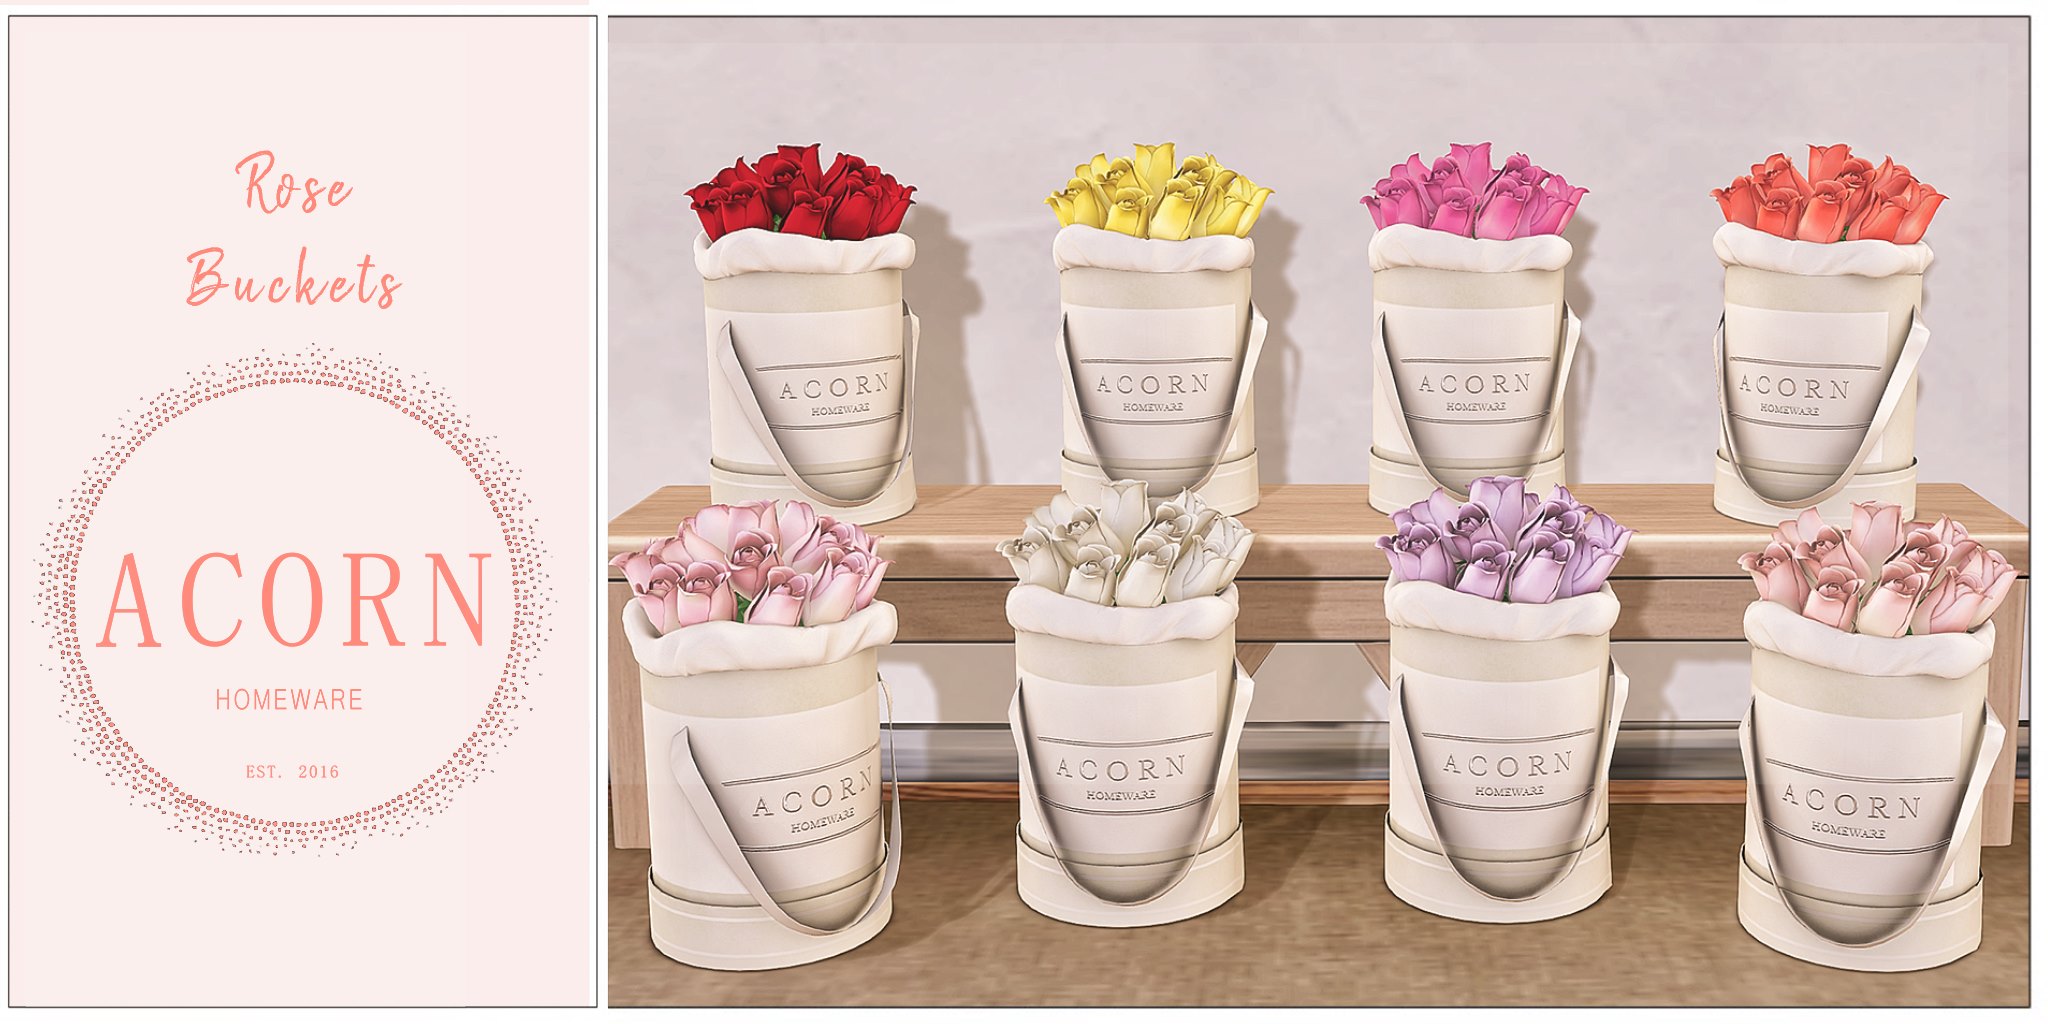 Acorn – Rose Buckets